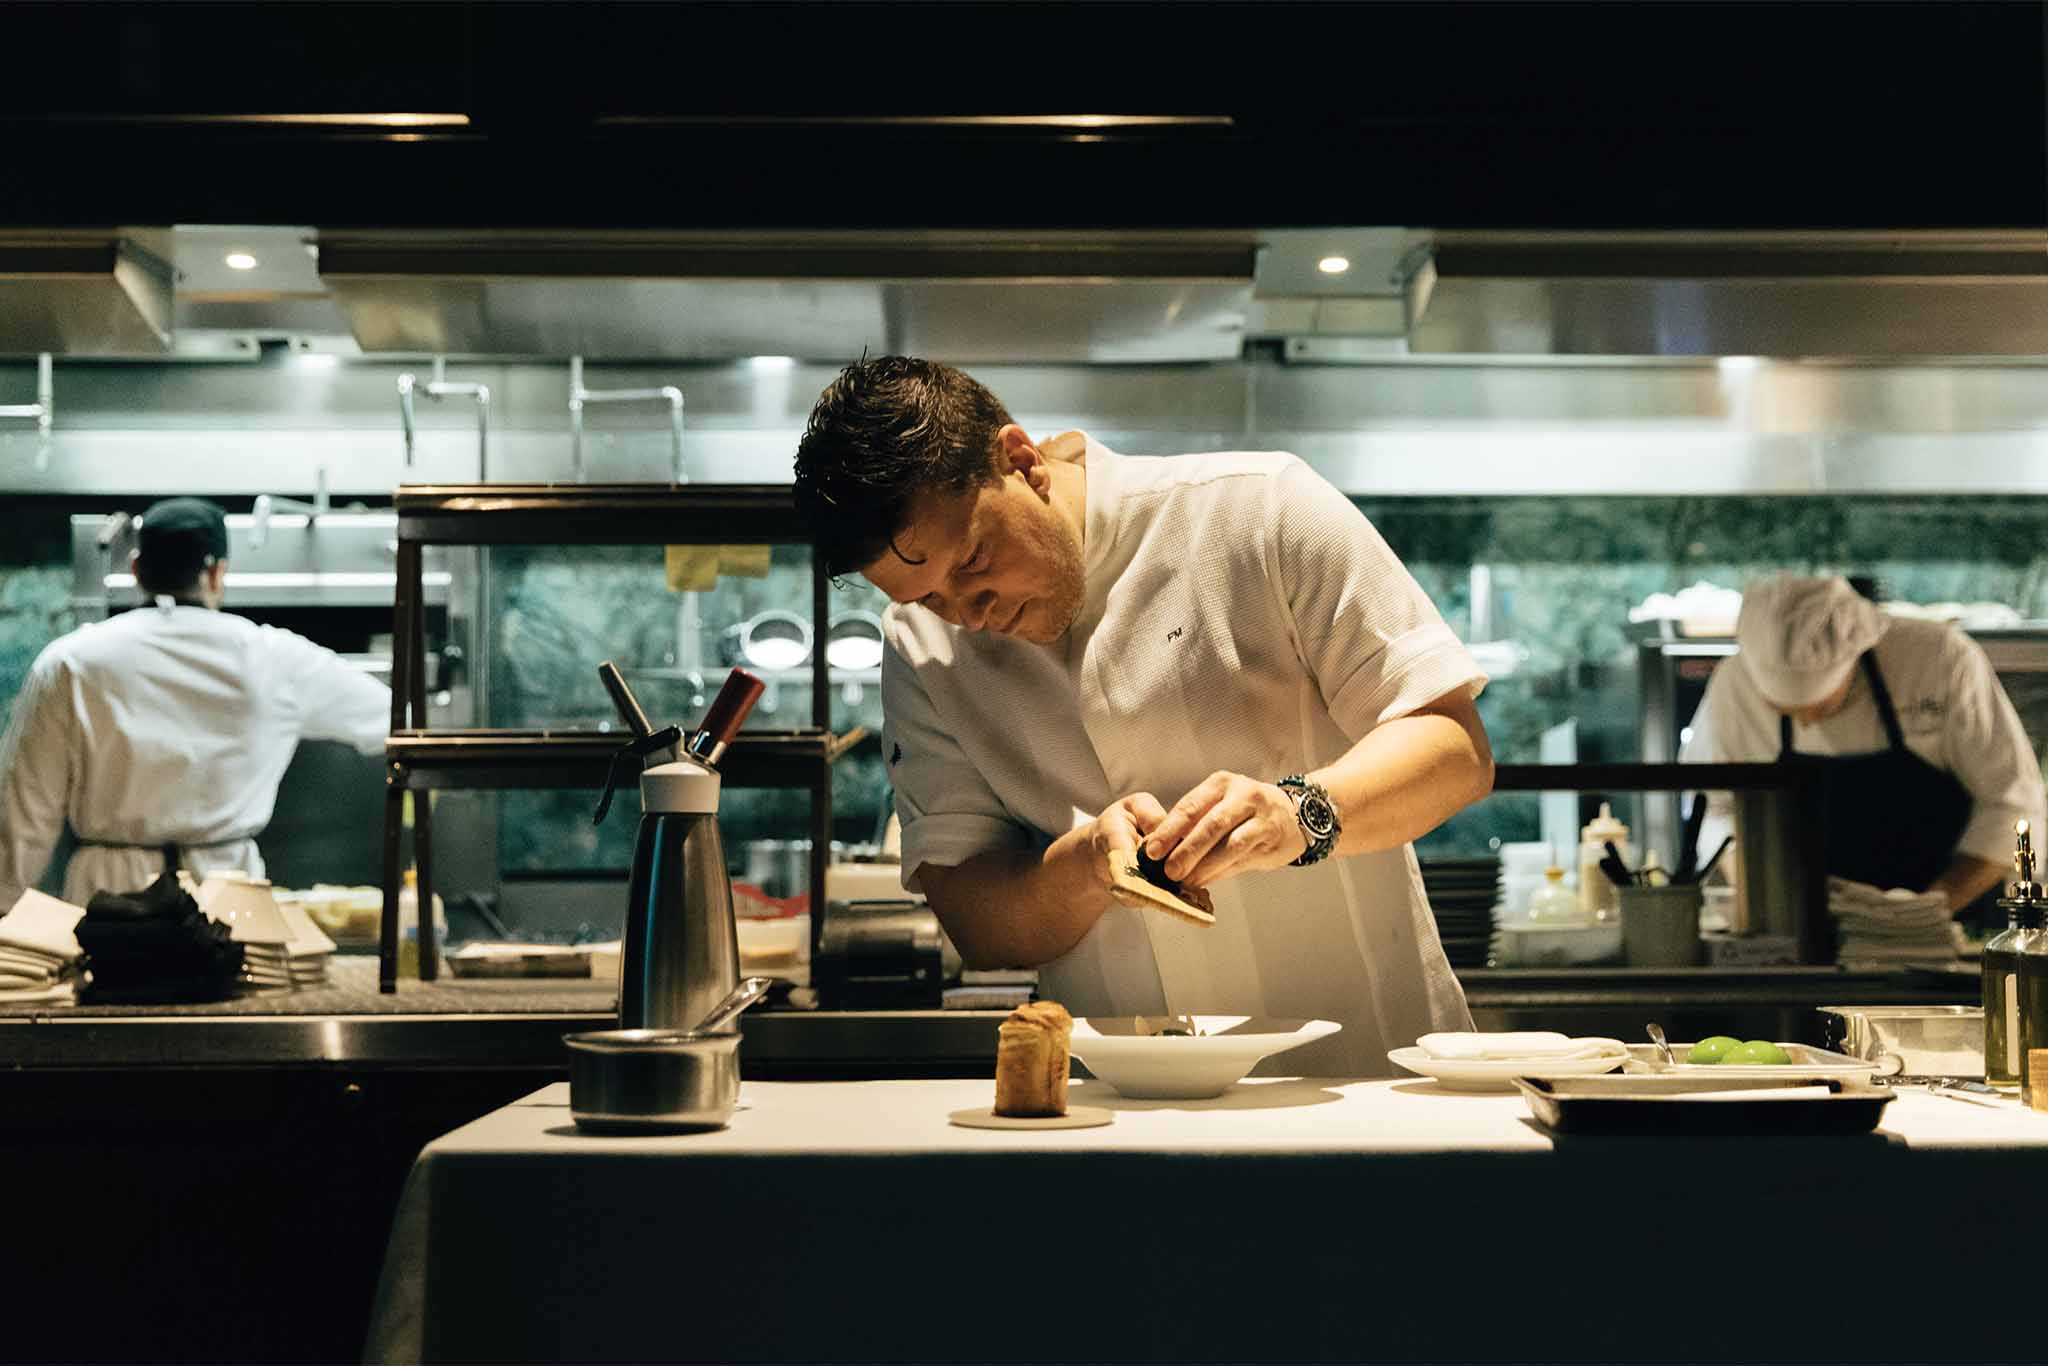 a person in a white shirt preparing food